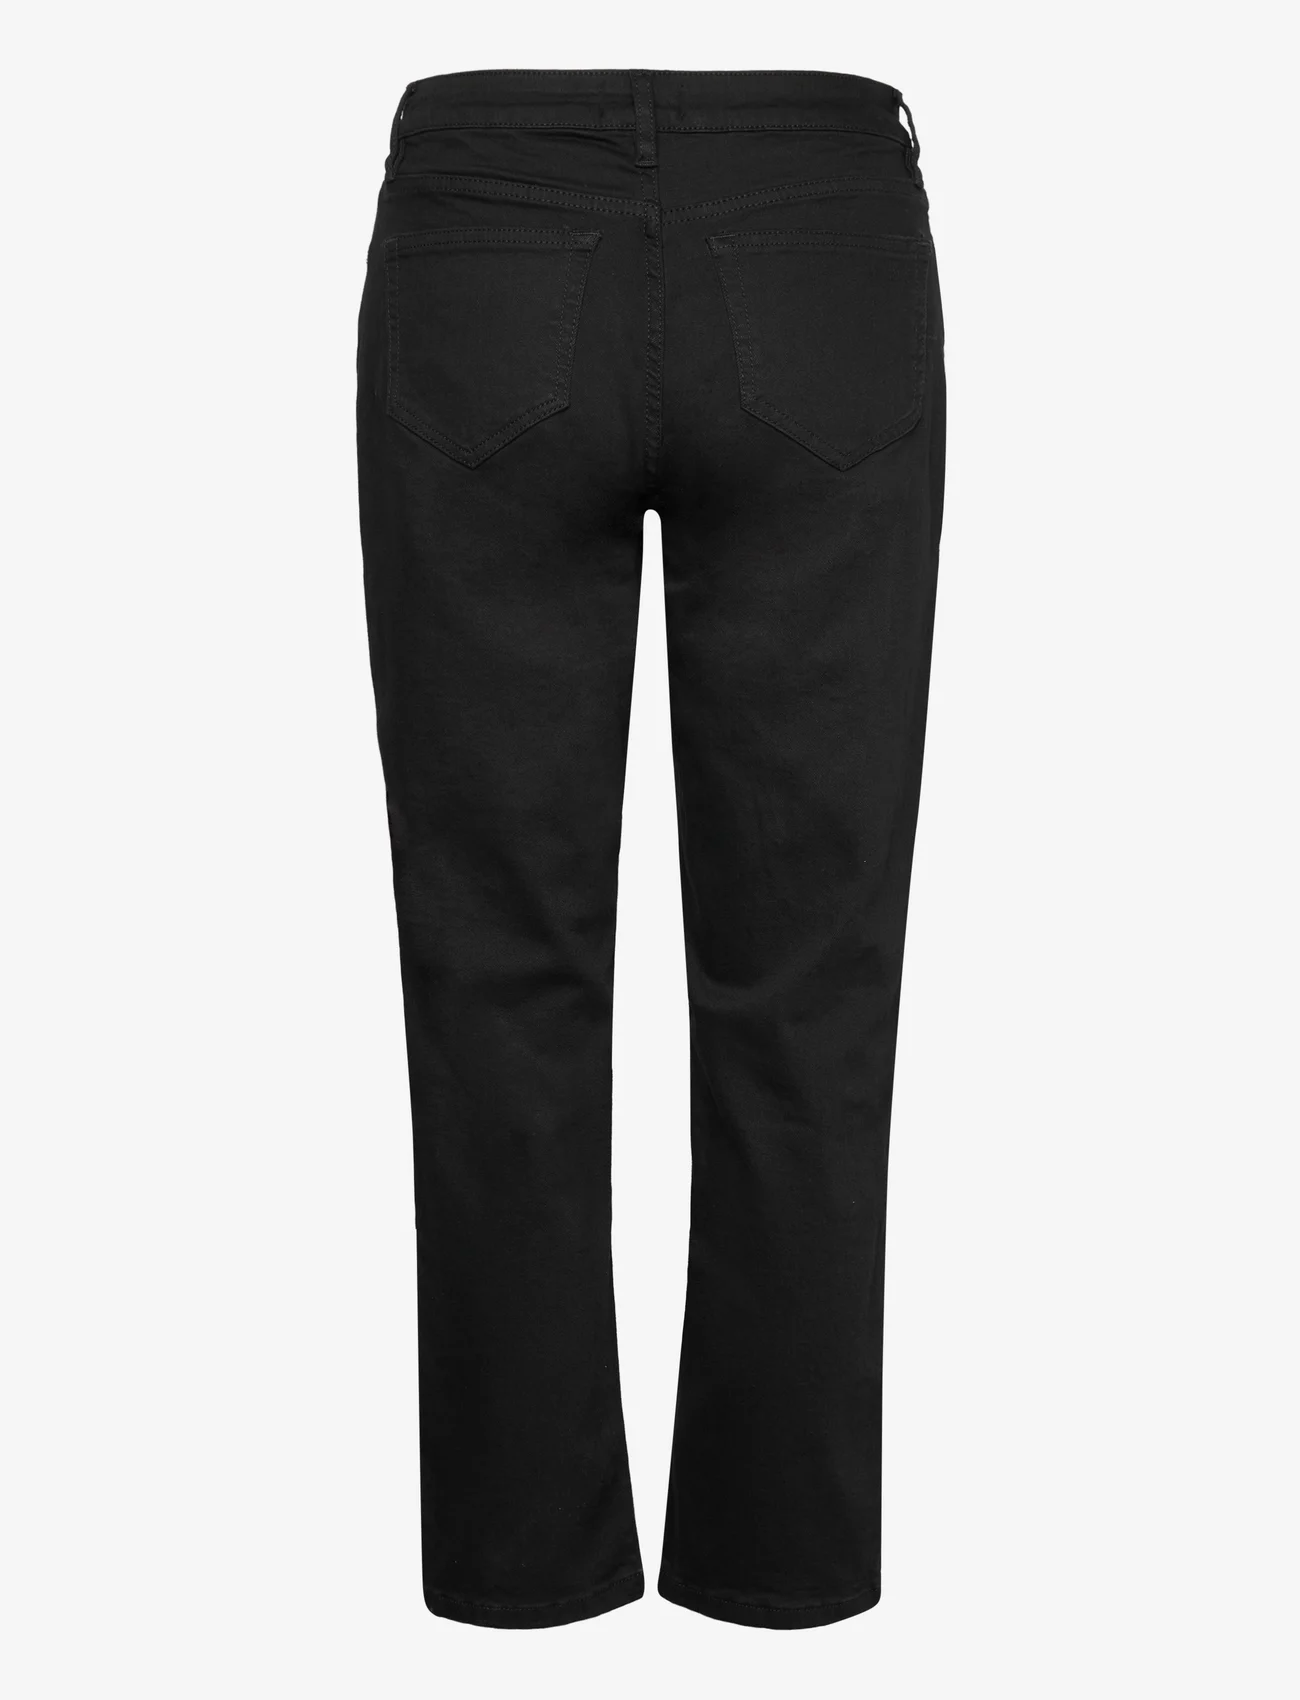 IVY Copenhagen - IVY-Tonya Jeans Wash Soft Black - straight jeans - black - 1